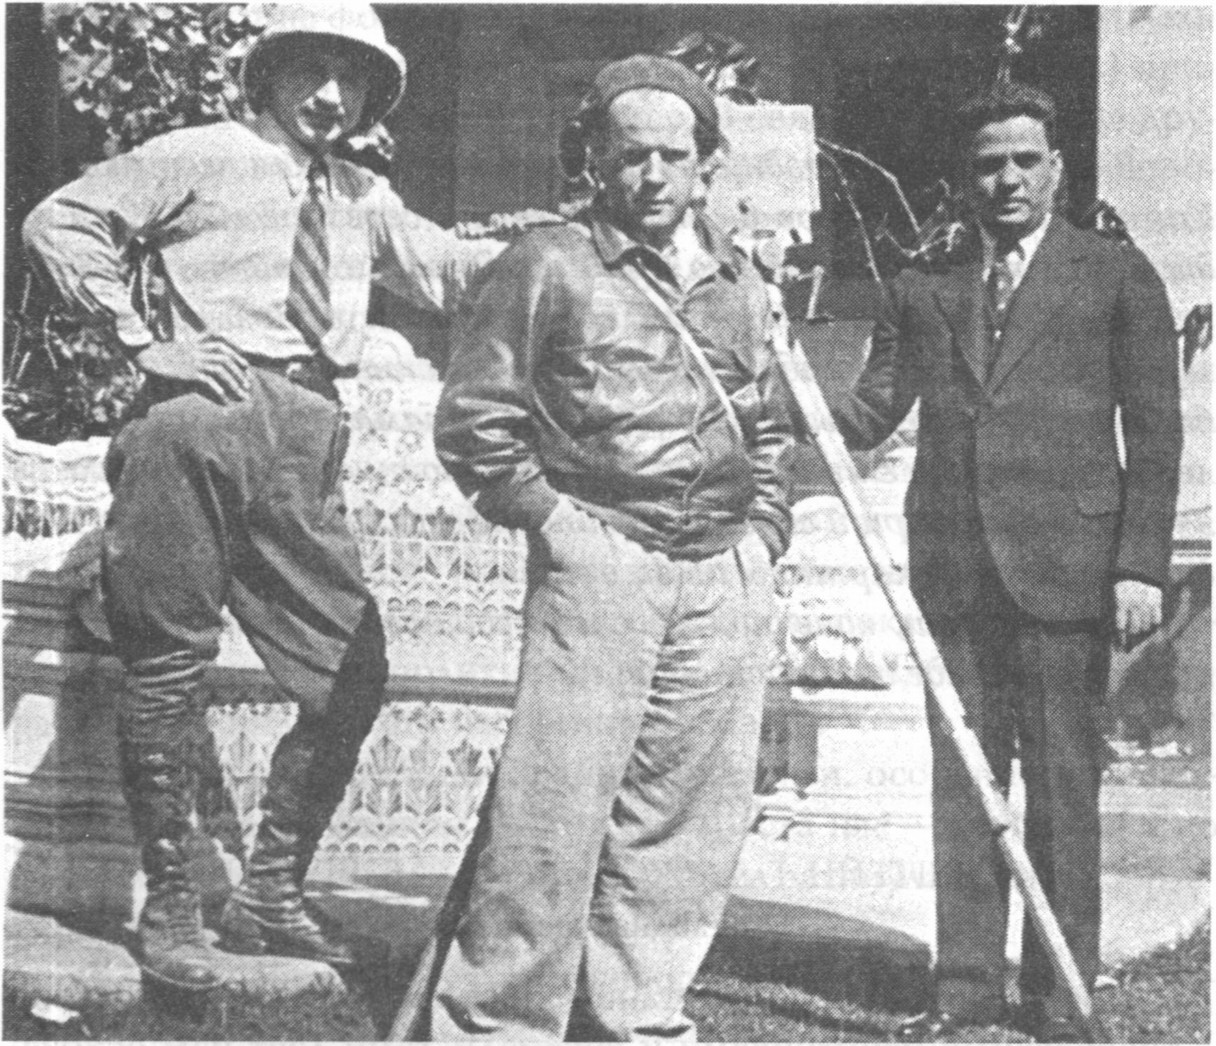 Сергей Эйзенштейн и Эдуард Тиссэ с губернатором штата Оахака на юге Мексики во время съемок фильма «Да здравствует Мексика!». 1930 г